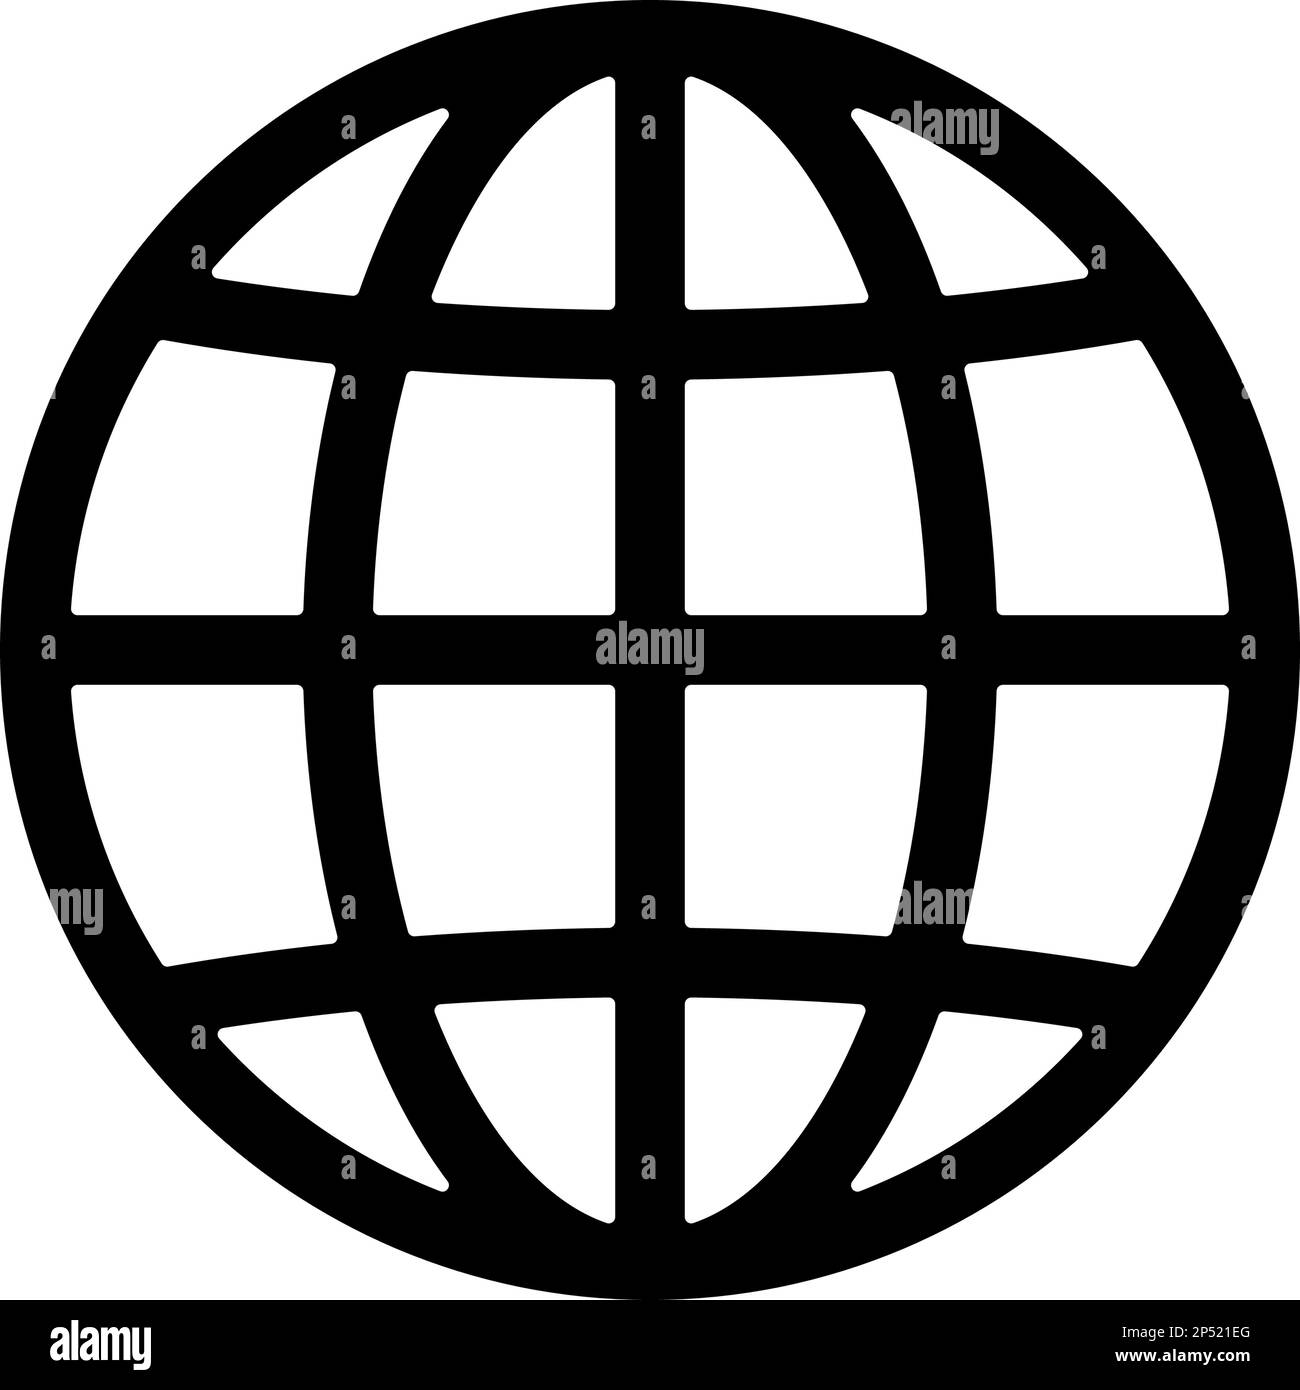 Weltsymbol Erdkugel Symbol. Abbildung eines flachen Vektors Stock Vektor